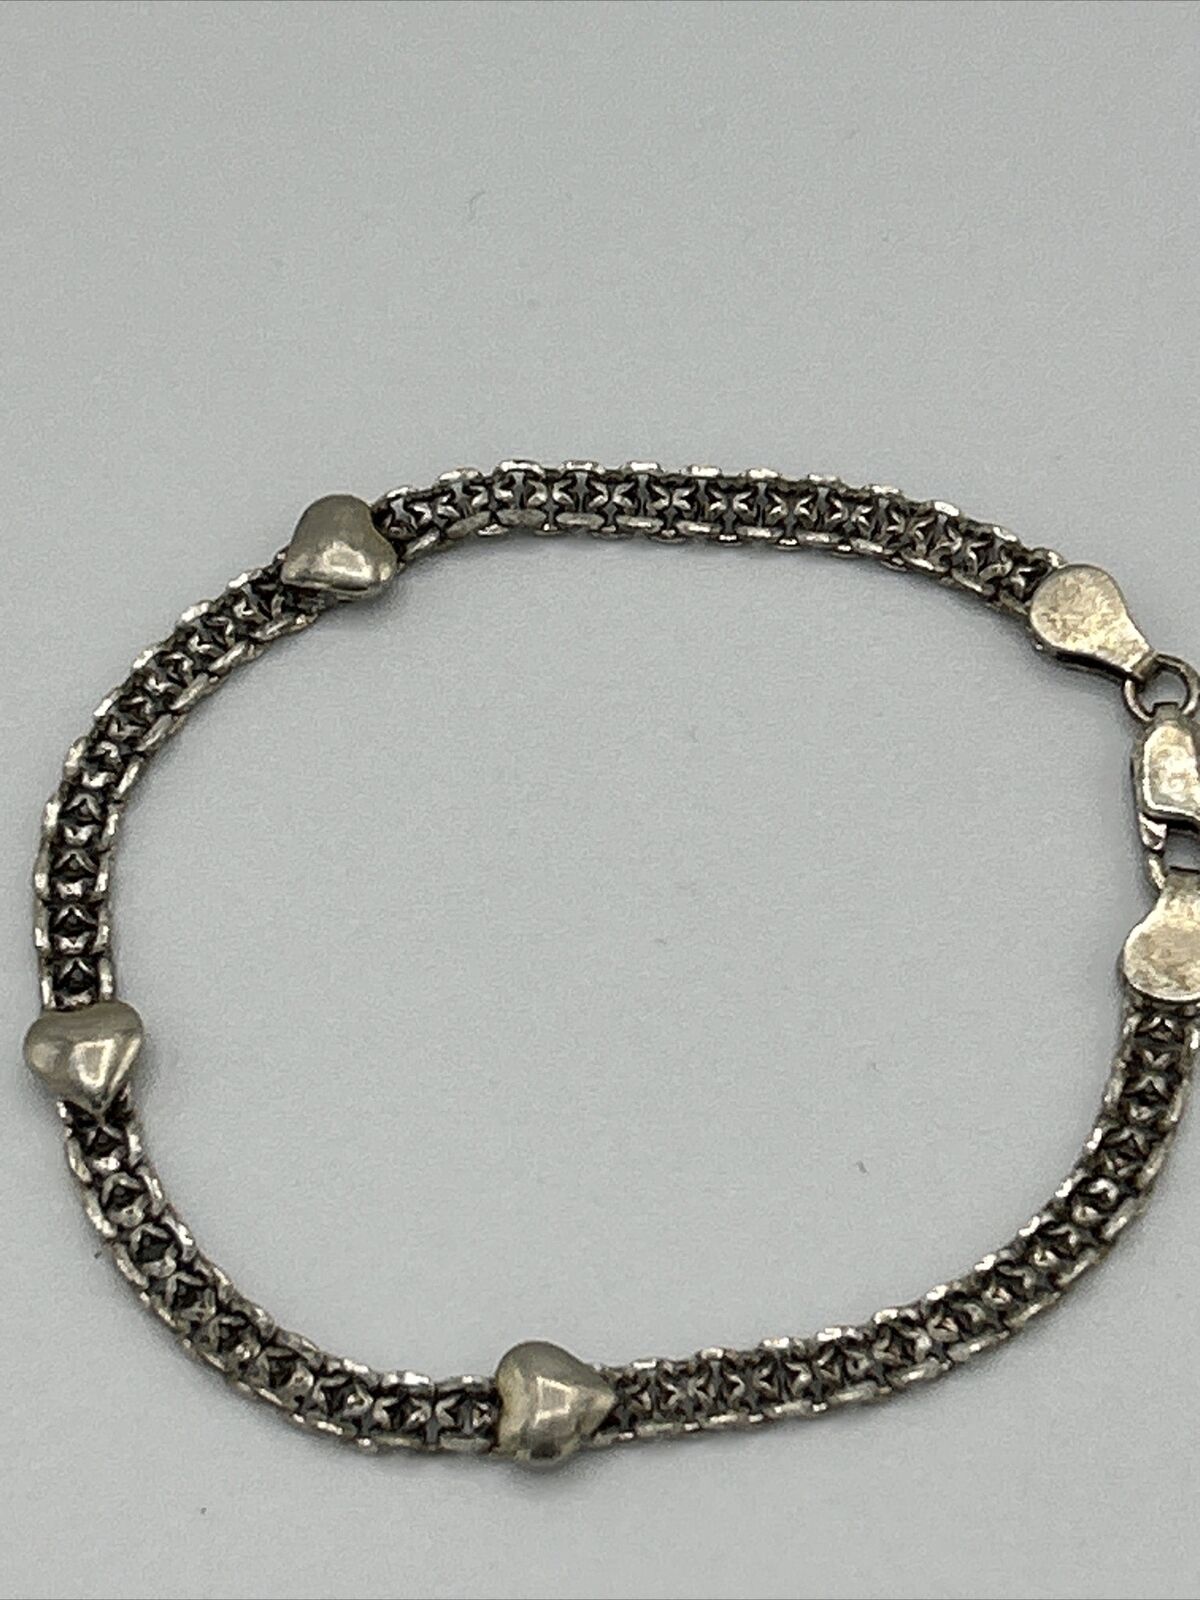 Vintage 925 Sterling Silver Bracelet with Hearts